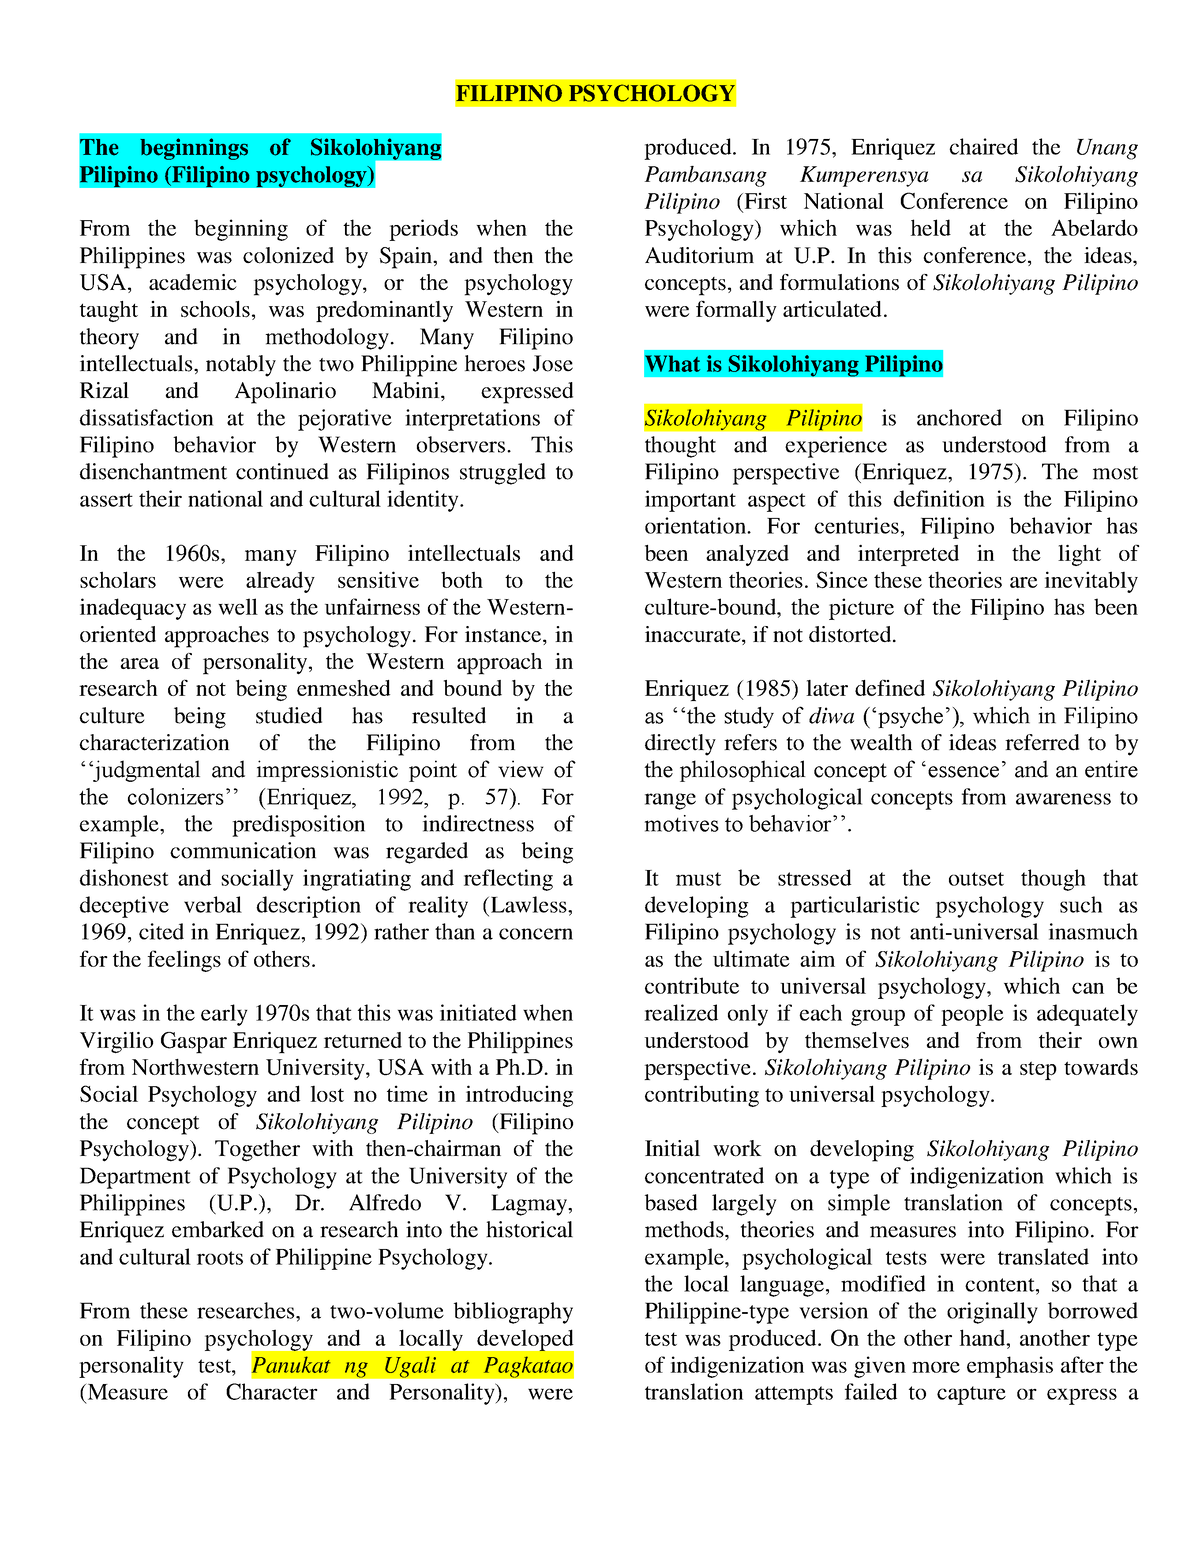 research paper about filipino psychology